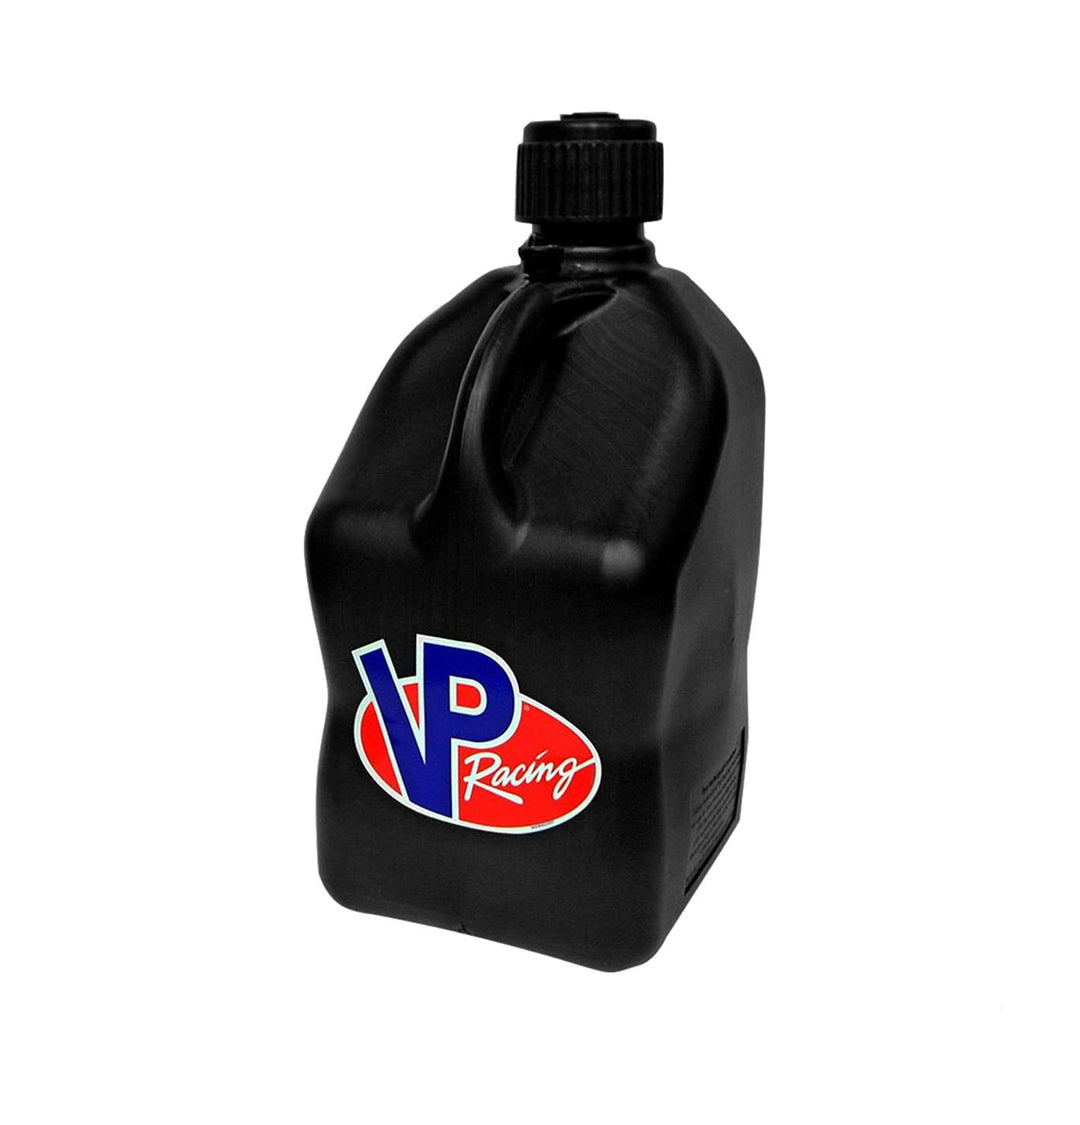 VP Racing 5.5-Gallon Motorsport Container - Black Jug, Black Cap - Dirty Racing Products